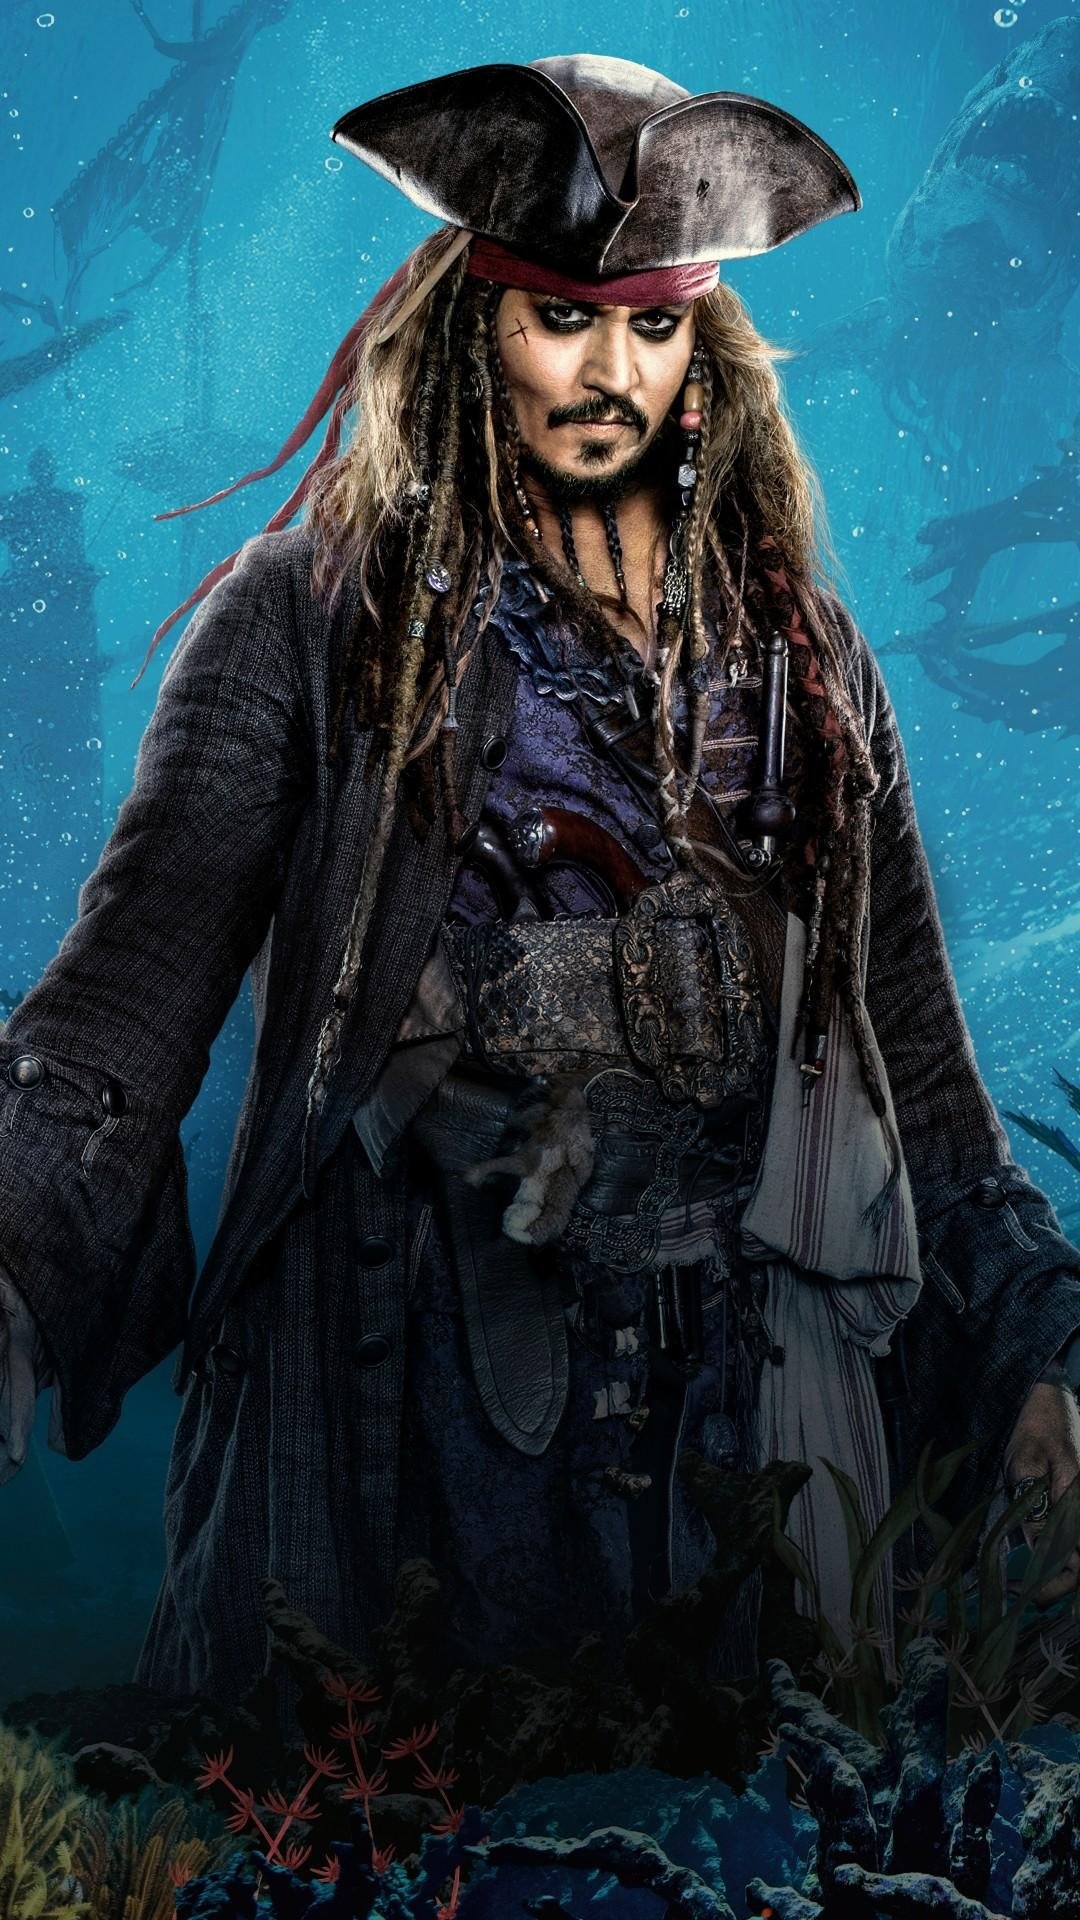 Captain Jack Sparrow - johnny depp